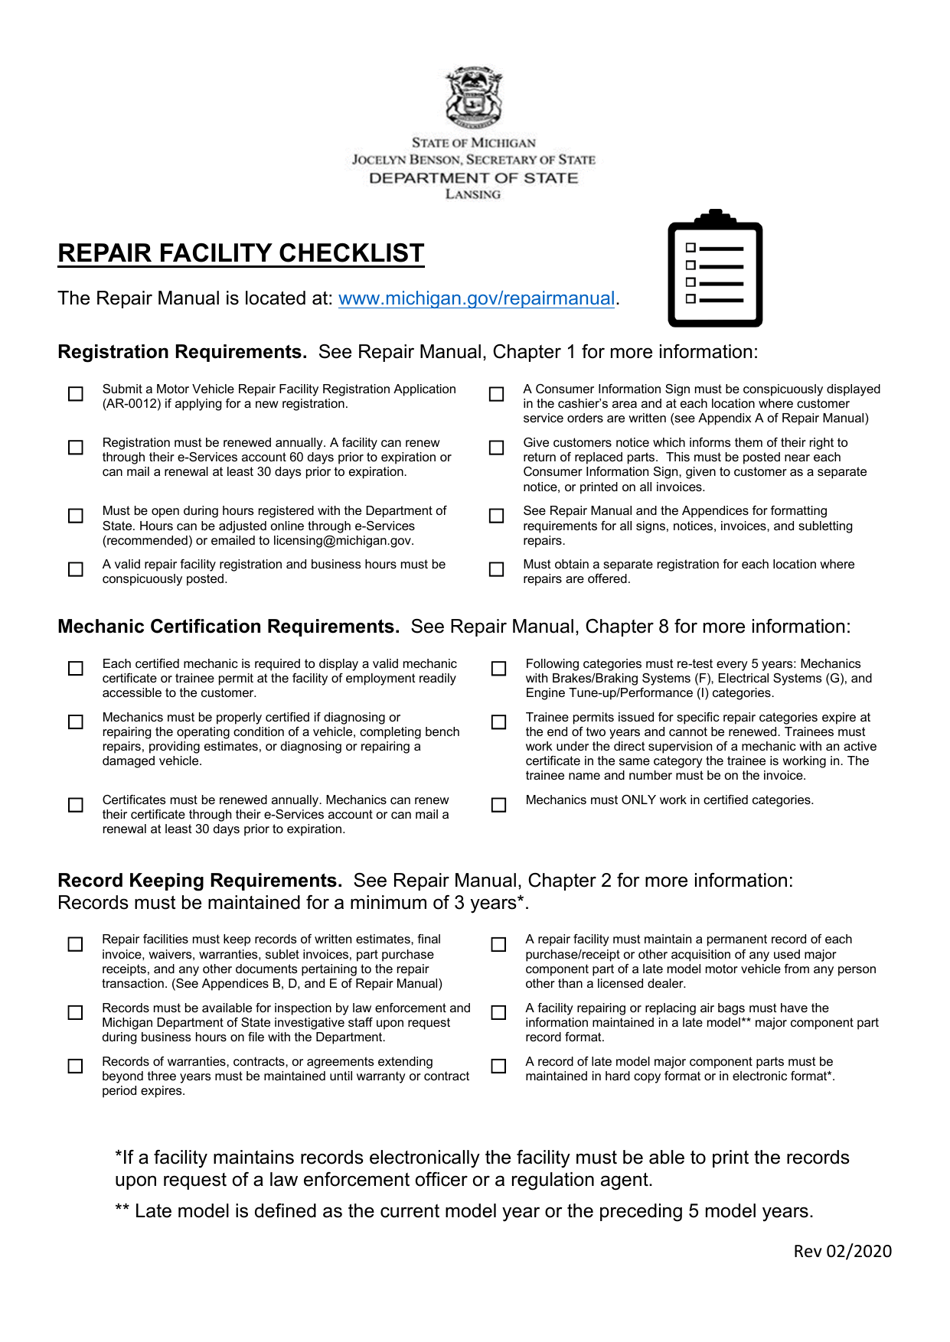 Repair Facility Checklist - Michigan, Page 1